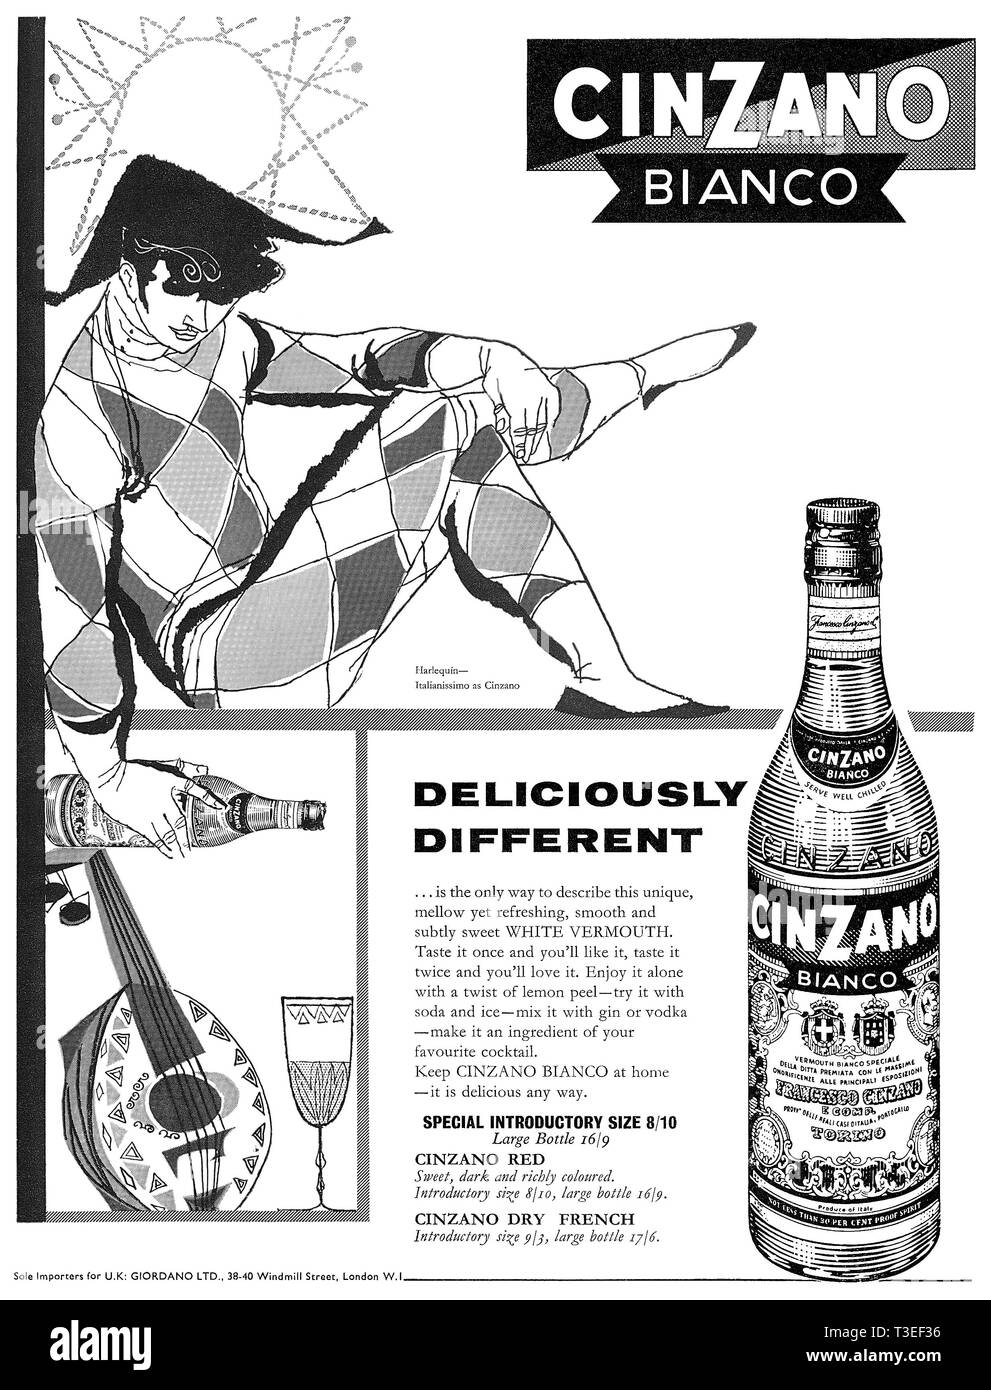 1959 British advertisement for Cinzano Bianco vermouth. Stock Photo